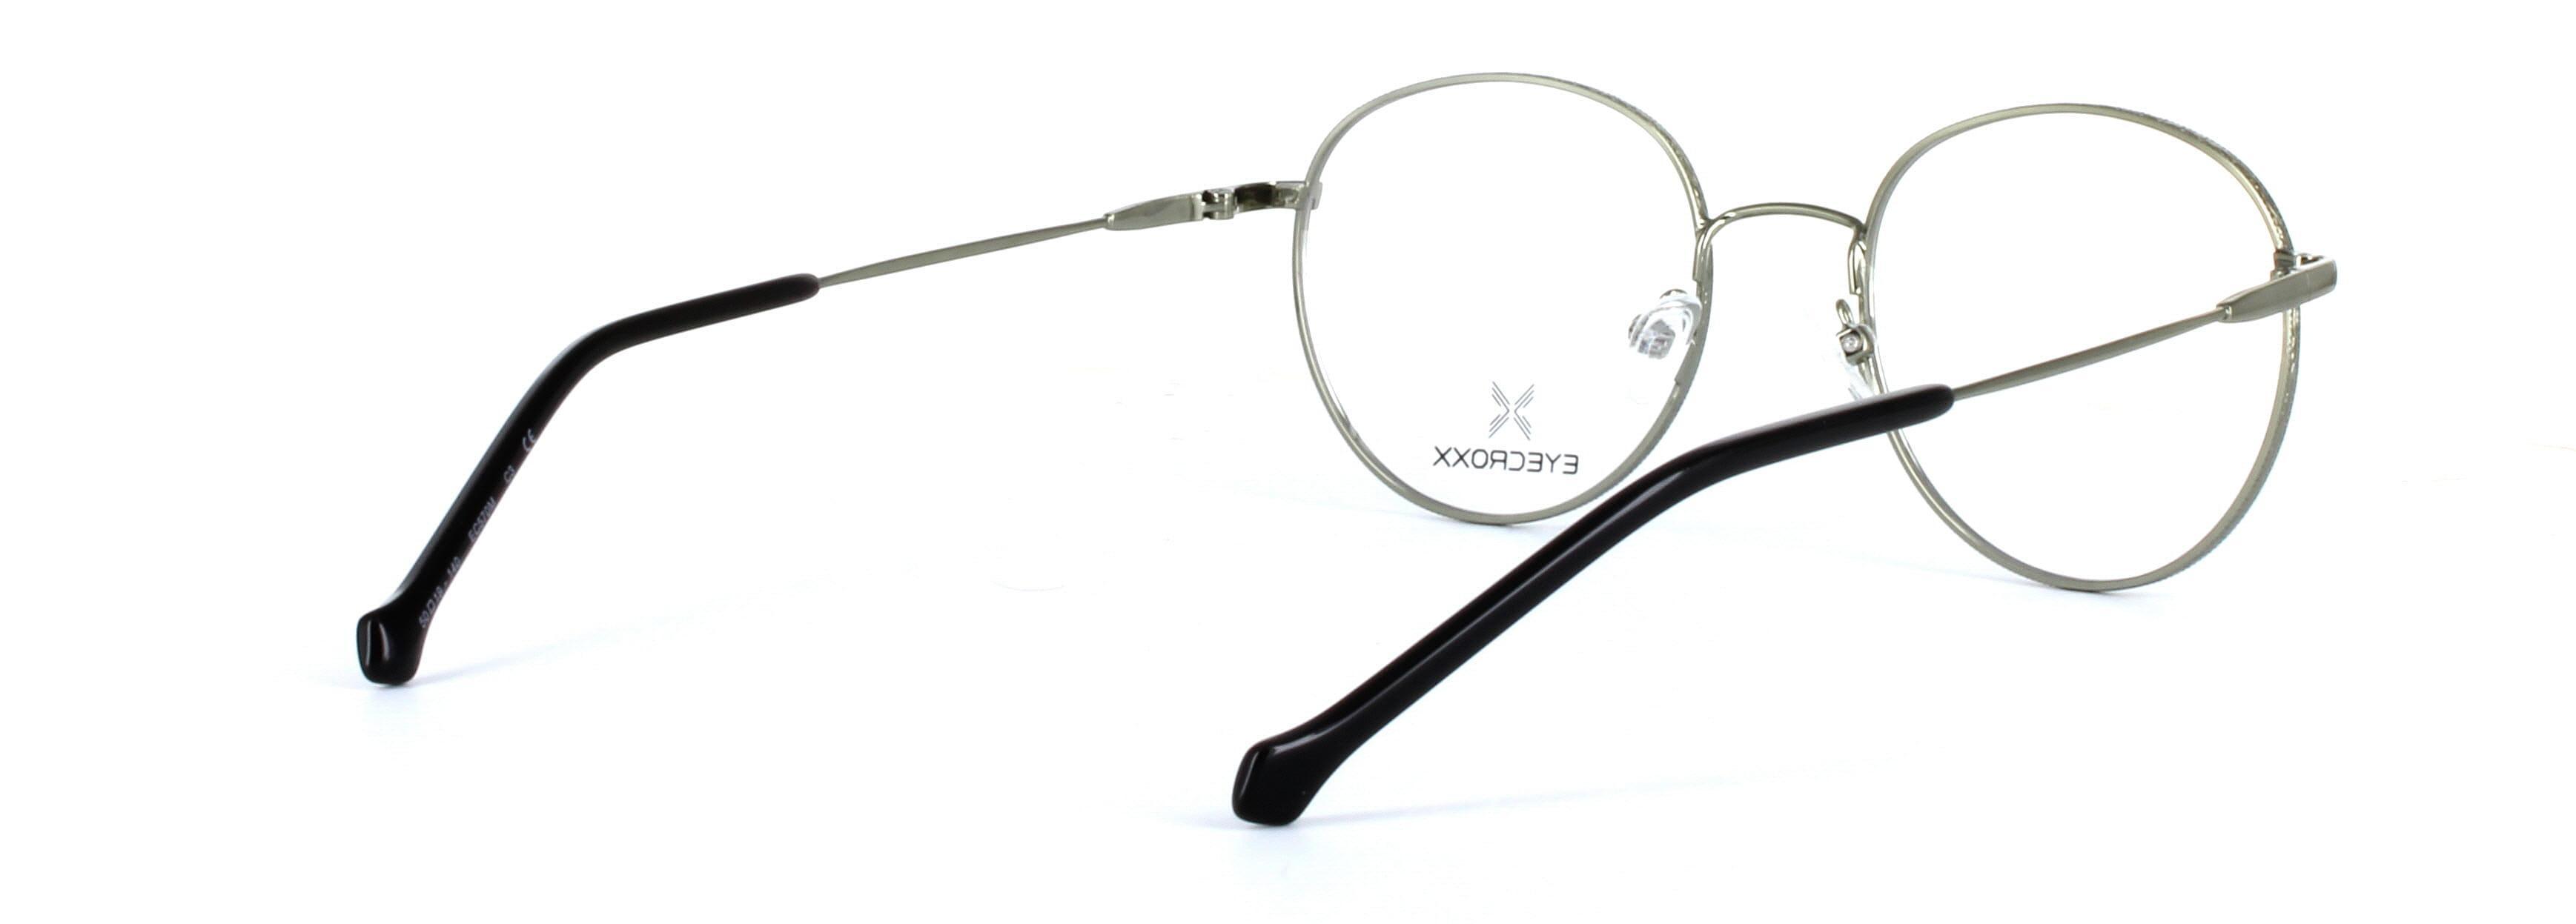 Eyecroxx 570-C3 Blue Full Rim Round Metal Glasses - Image View 4